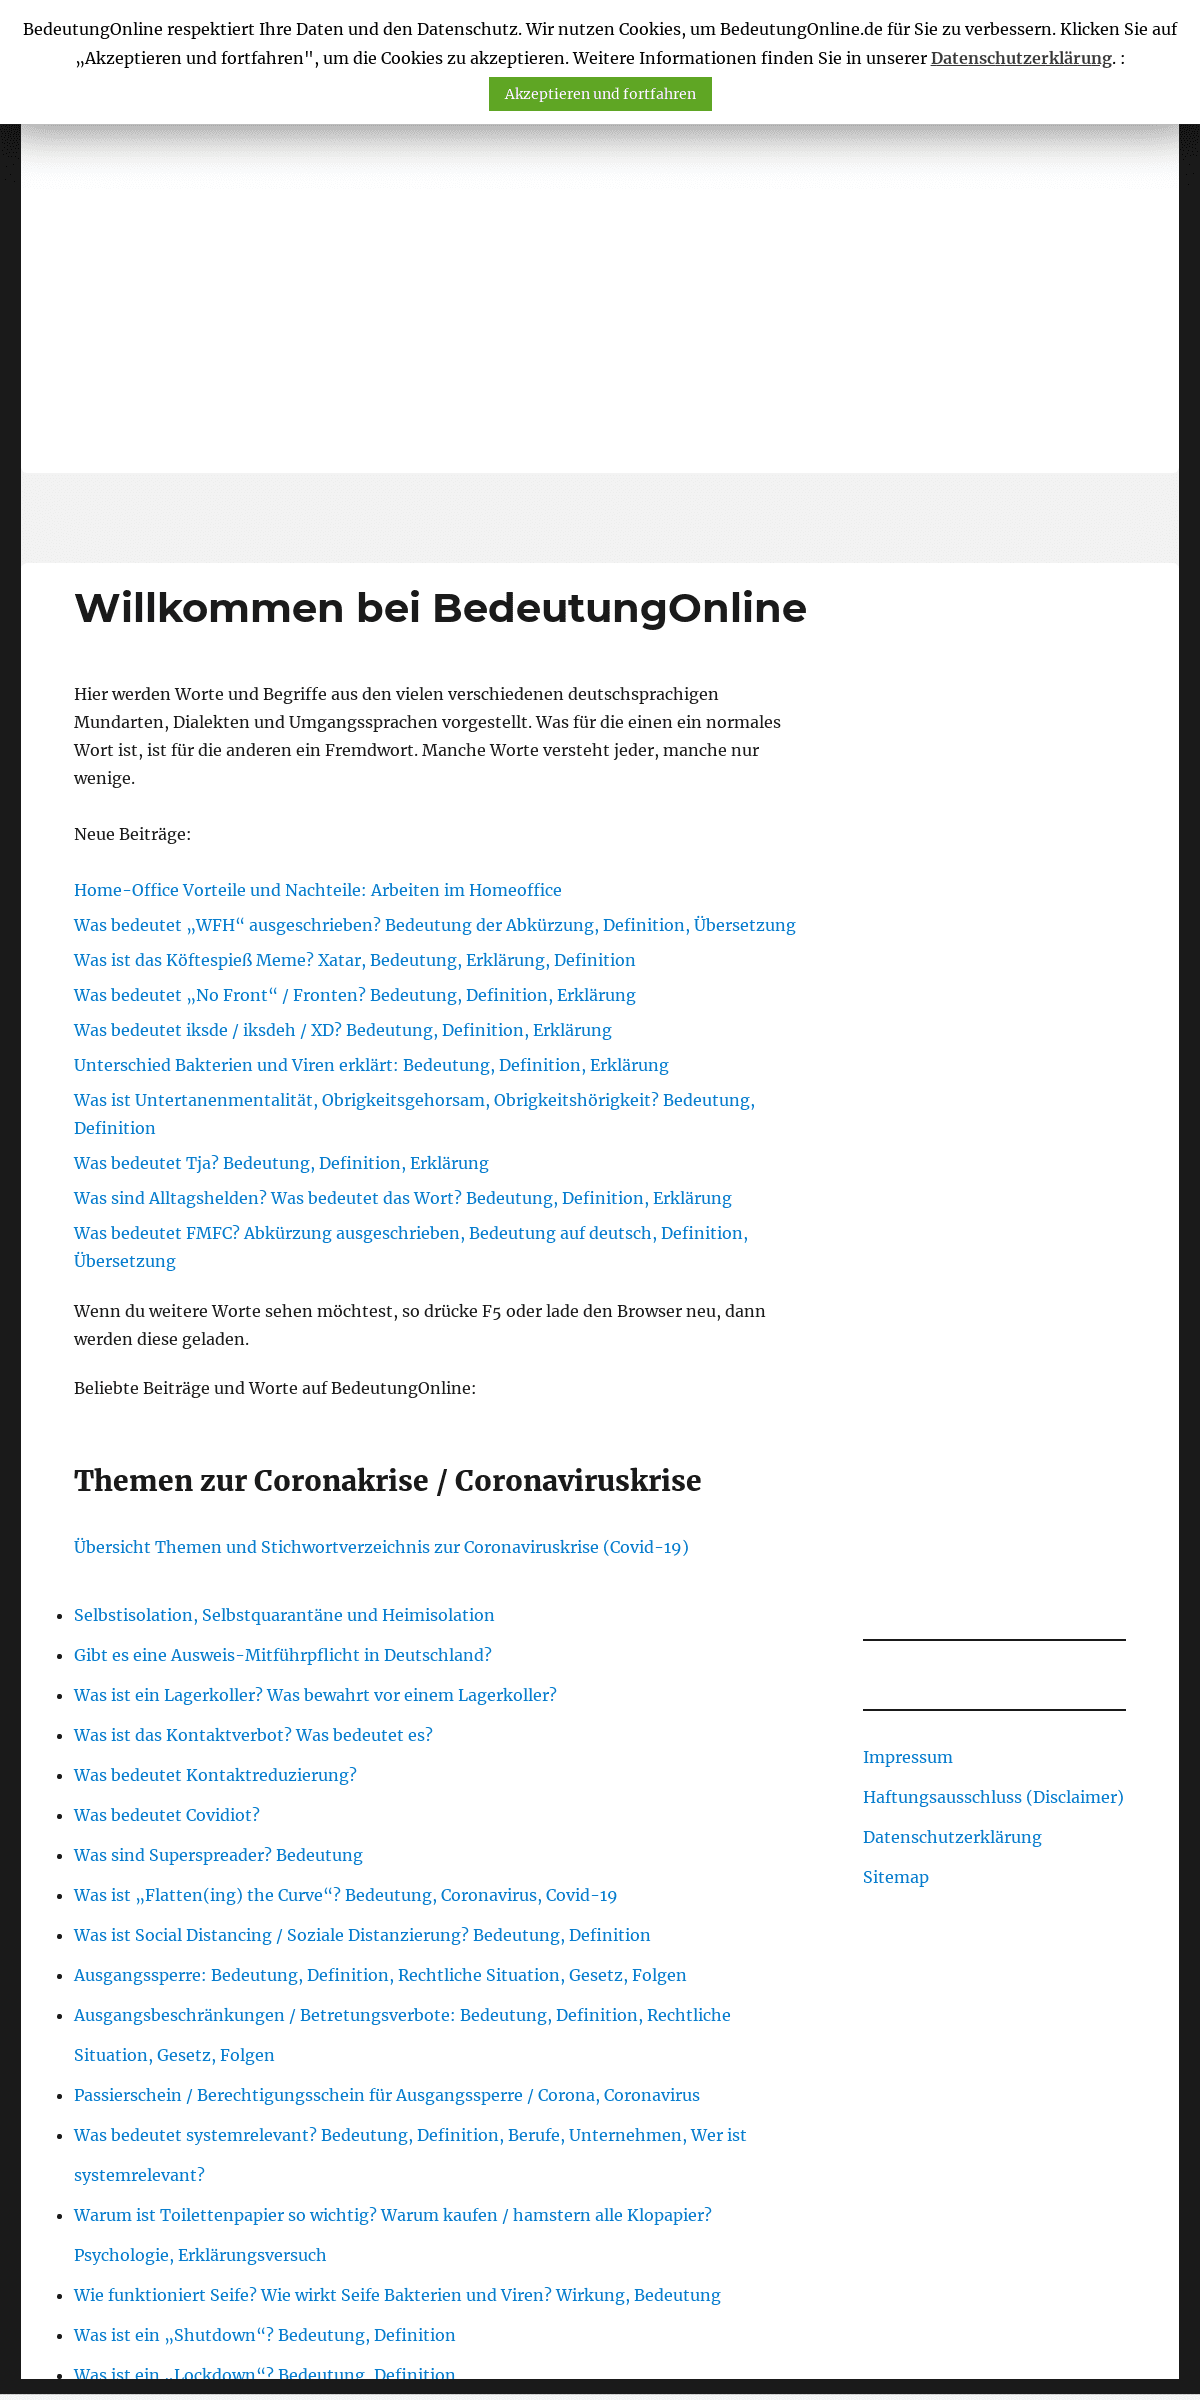 A complete backup of bedeutungonline.de